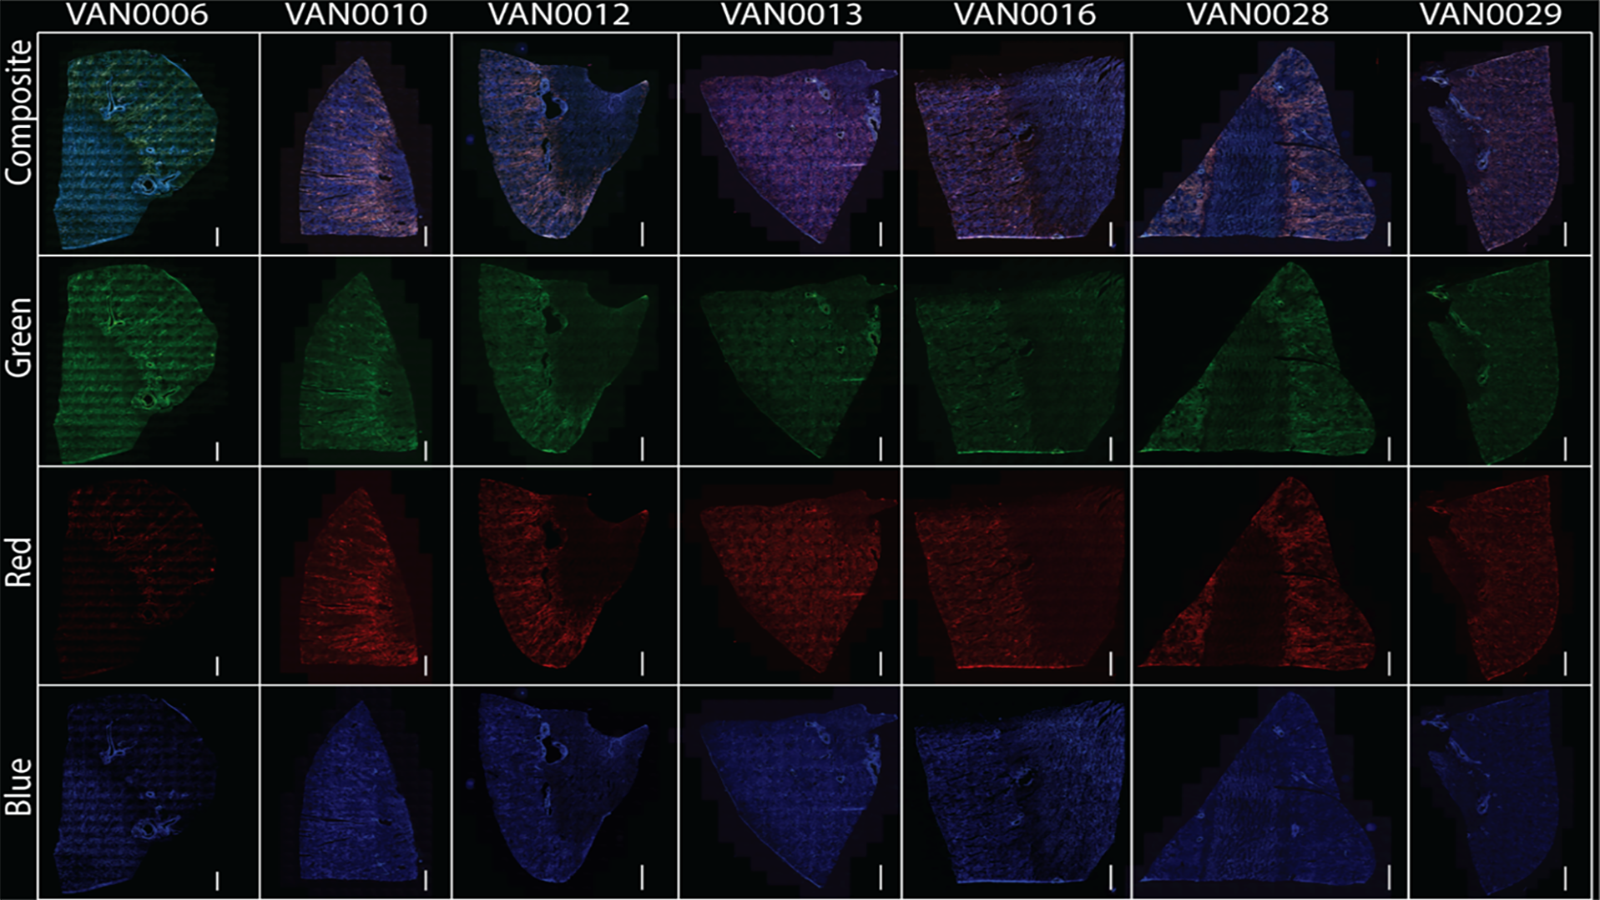 Autofluorescent images of kidneys courtesy of Dr. Elizabeth Neumann of Vanderbilt University